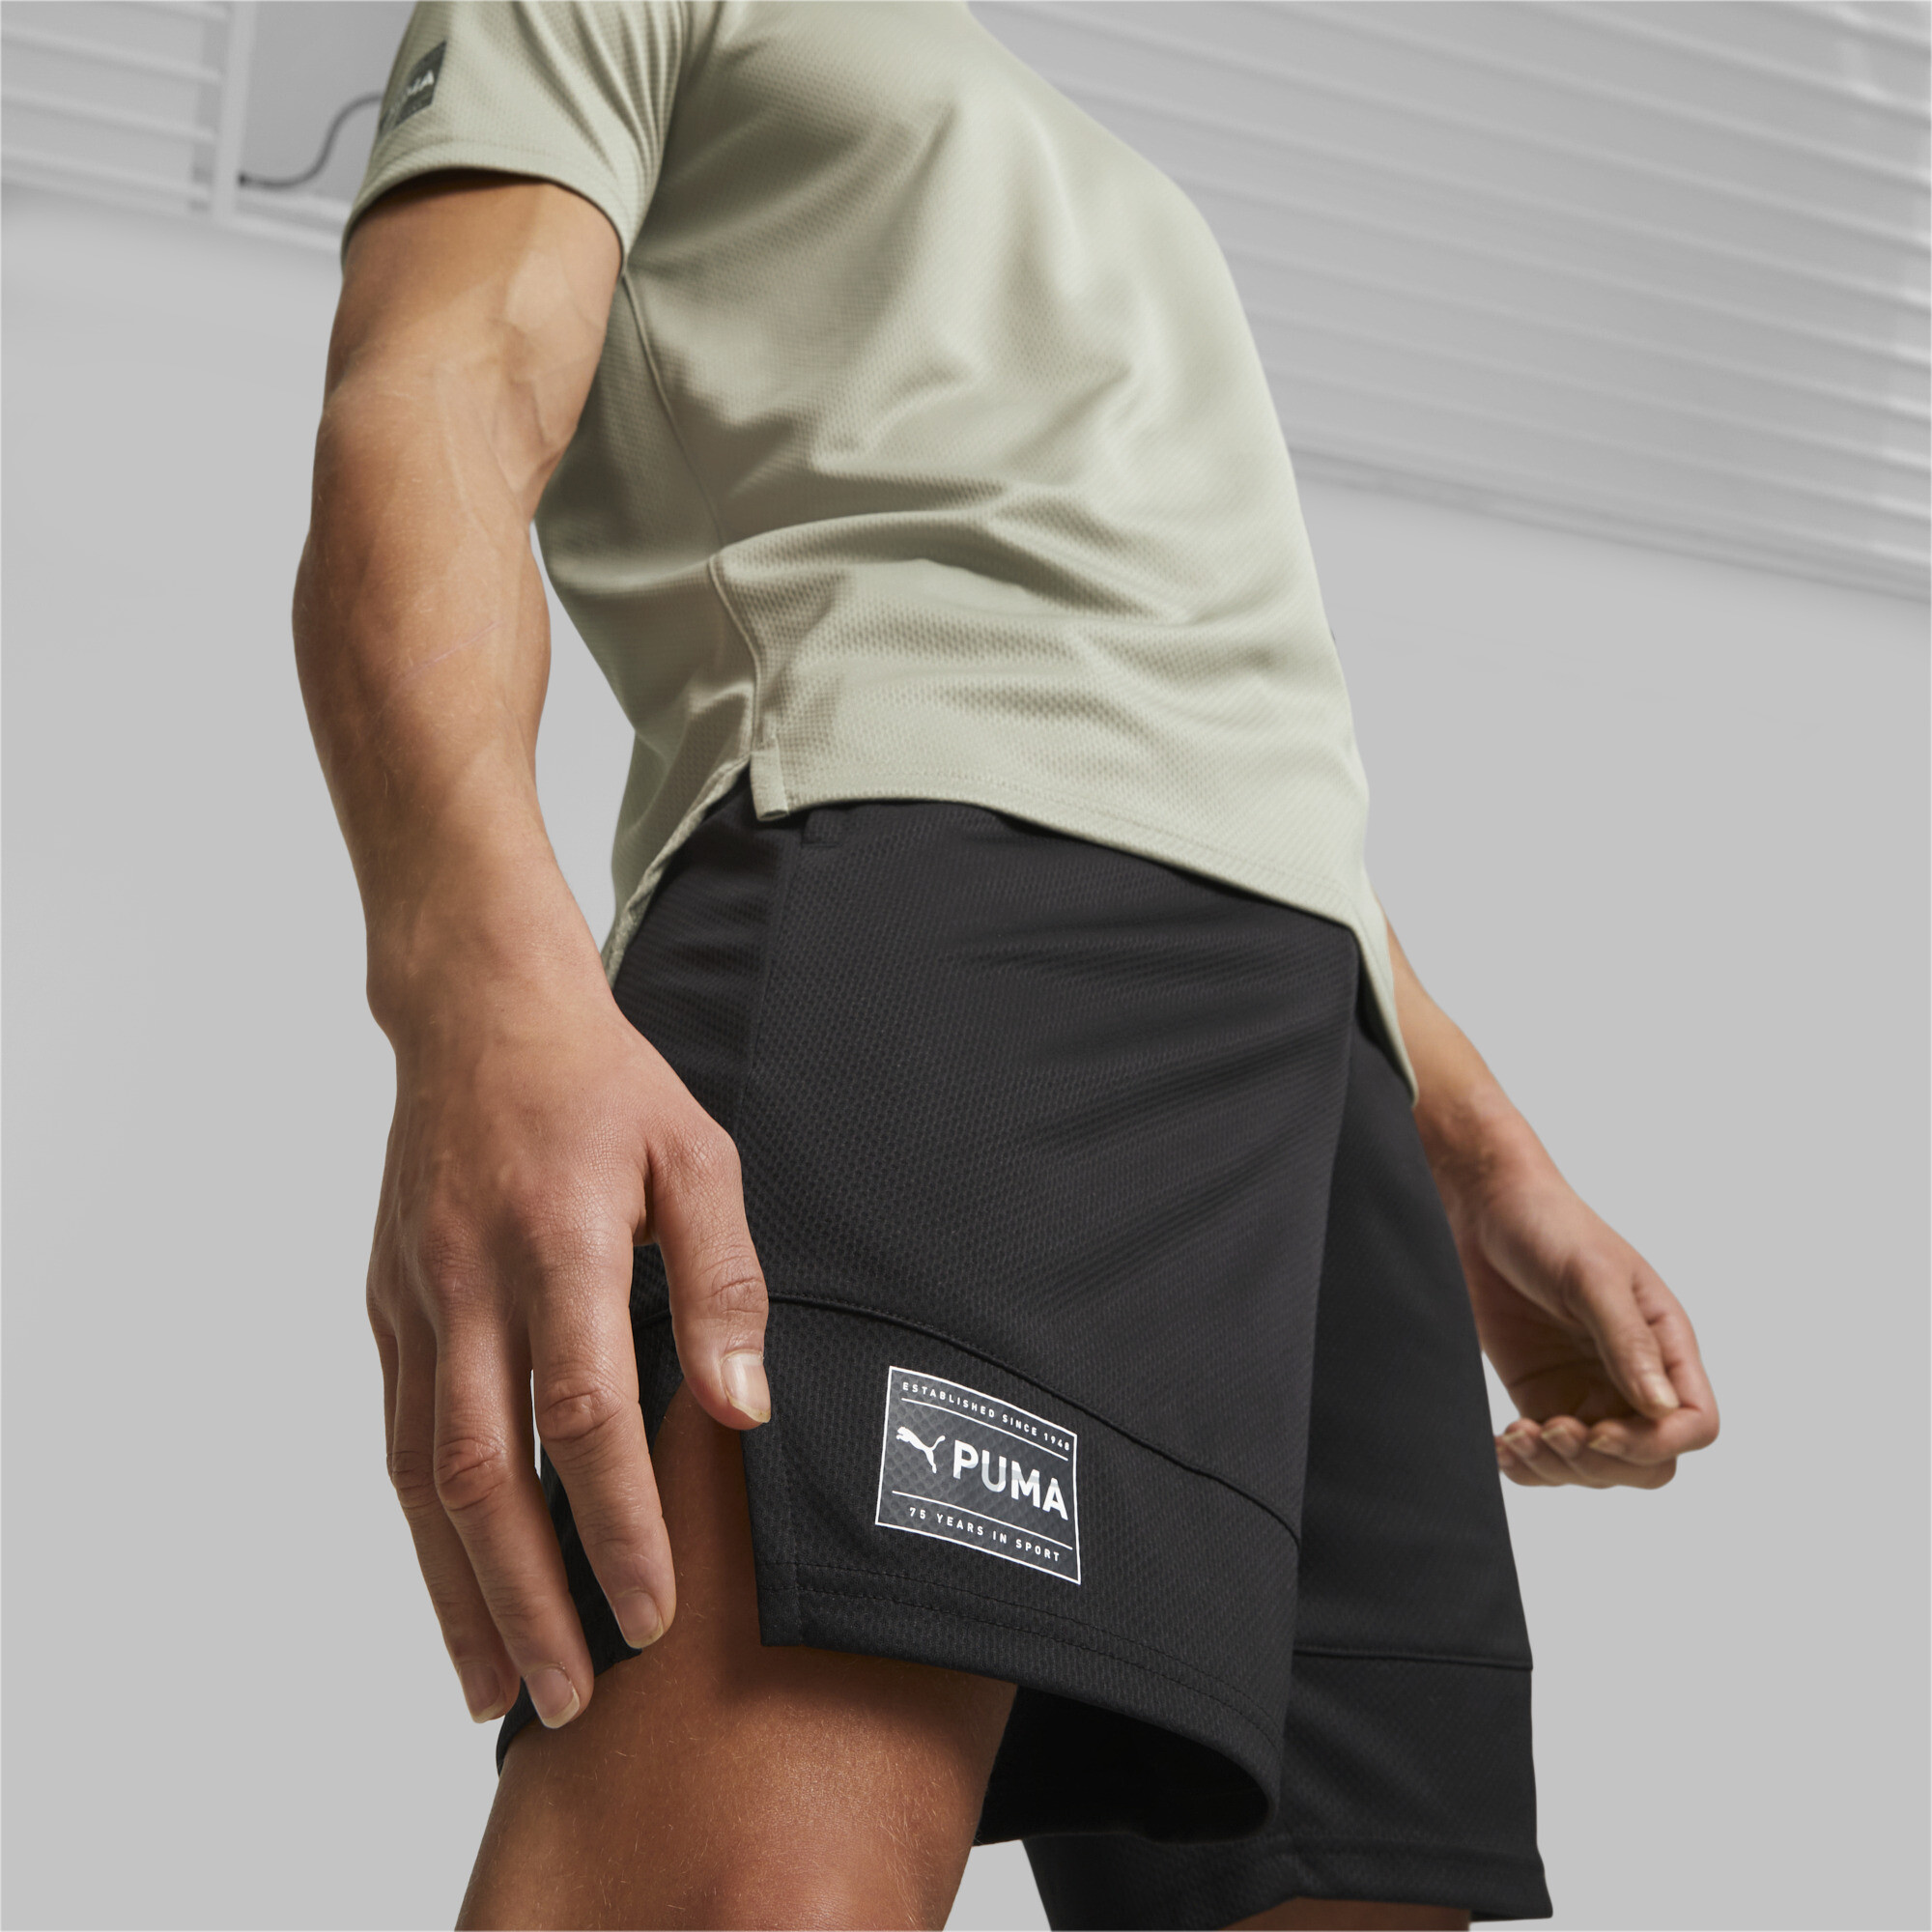 Men's PUMA Fit Ultrabreathe Training Shorts Men In Black, Size Small